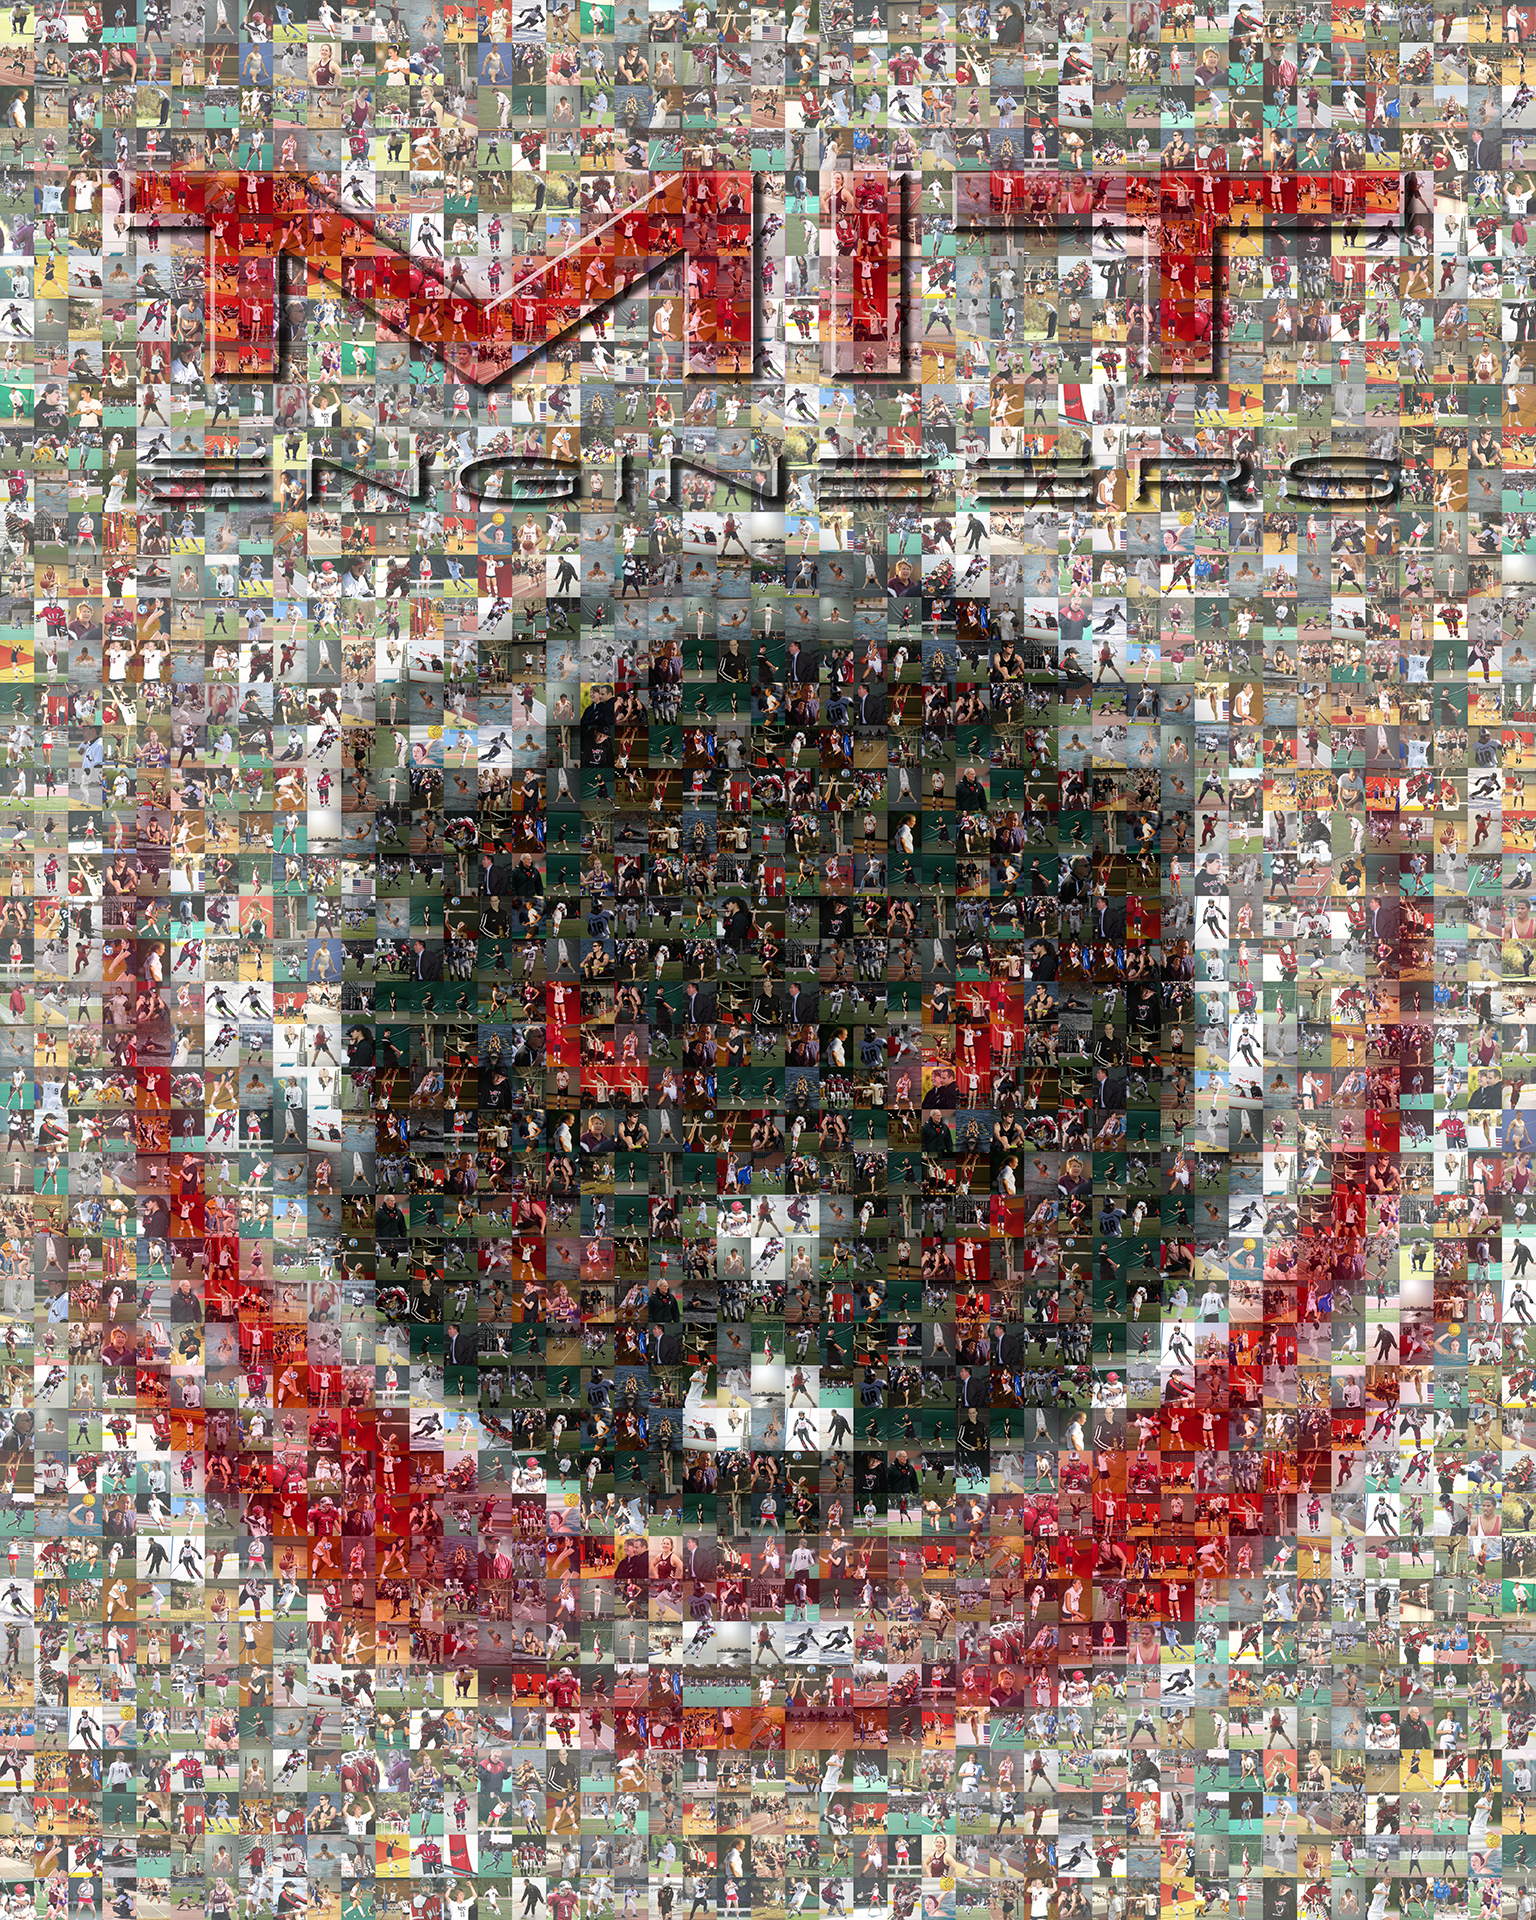 photo mosaic created using 655 photos from the University's athletic program